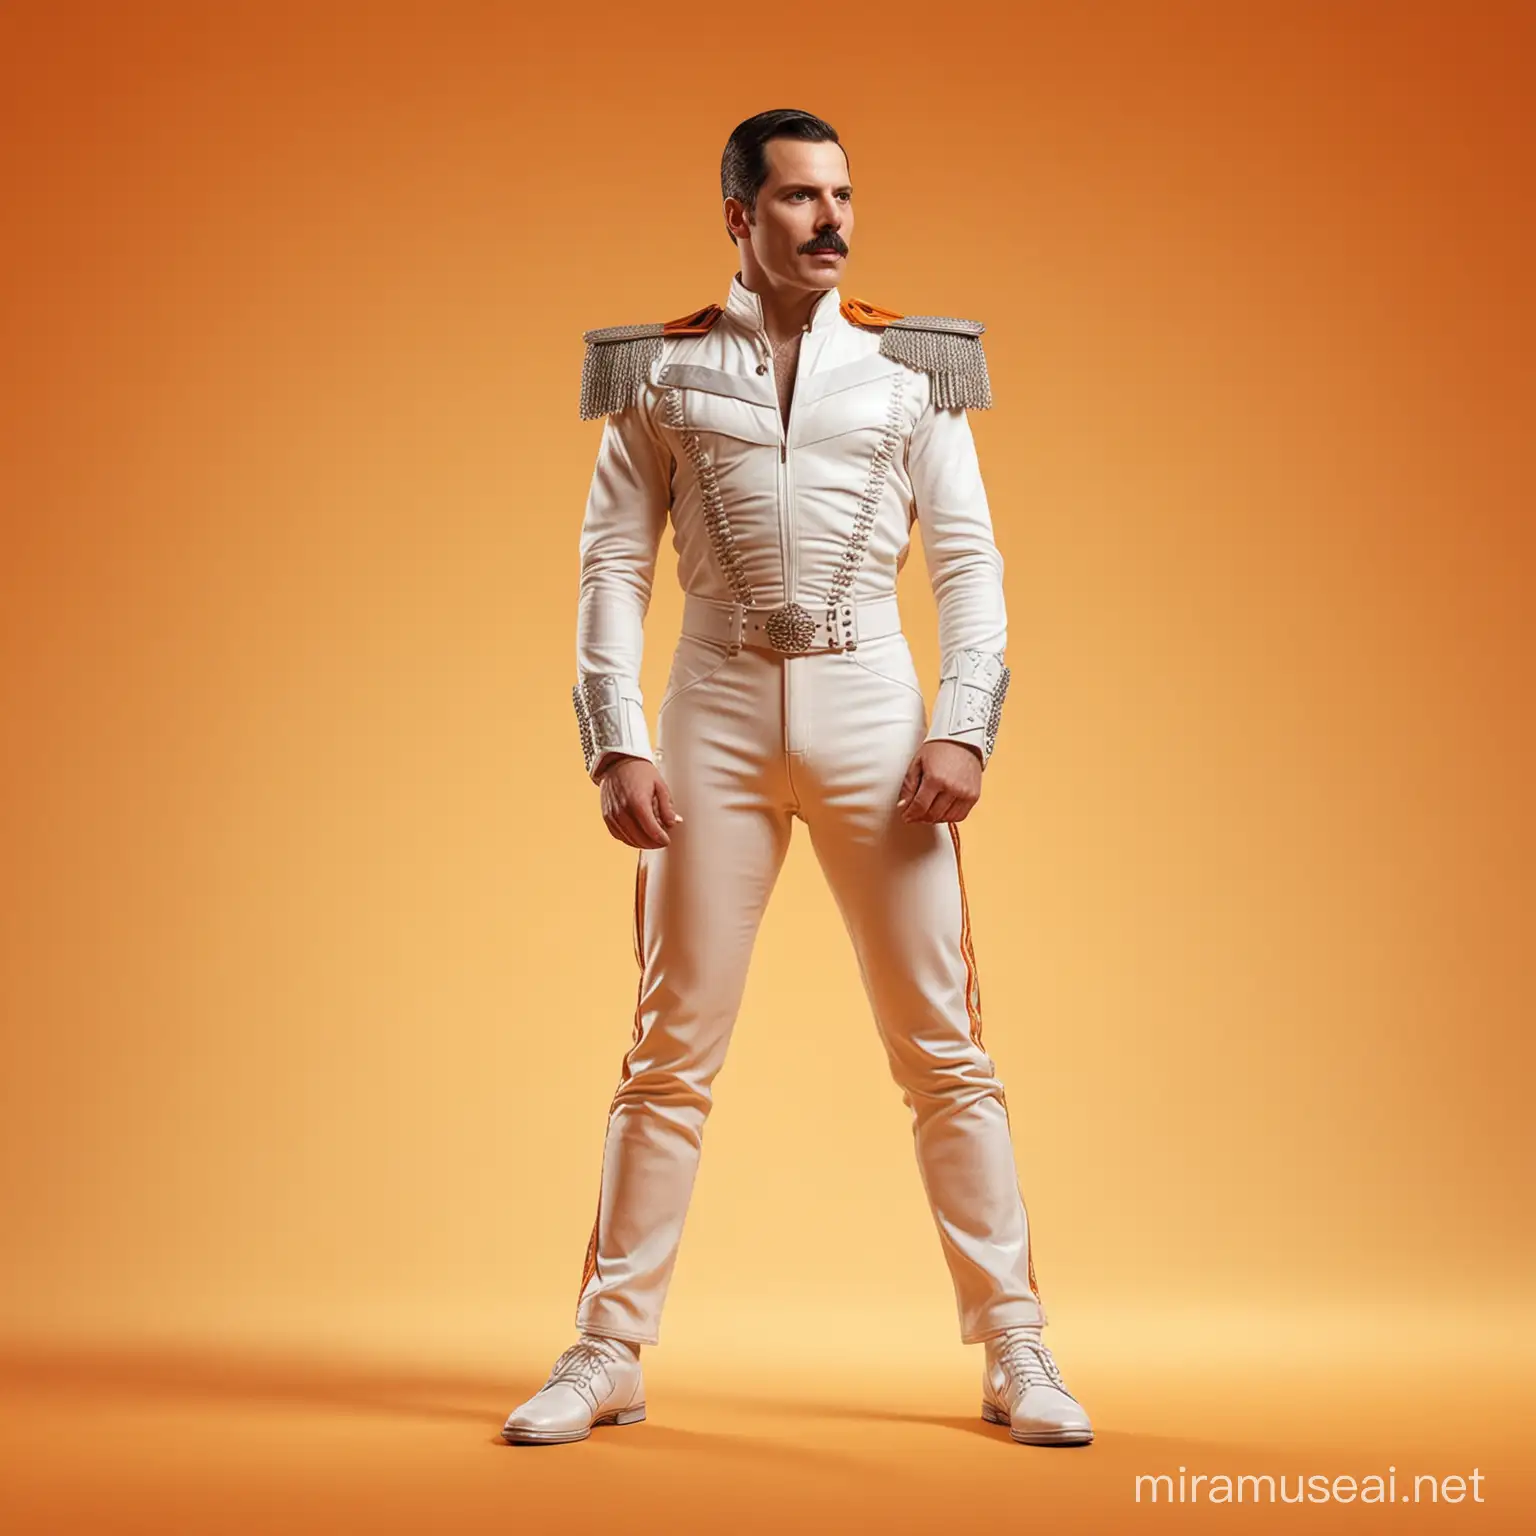 Freddie Mercury Performing in White Costume on Vibrant Orange Stage